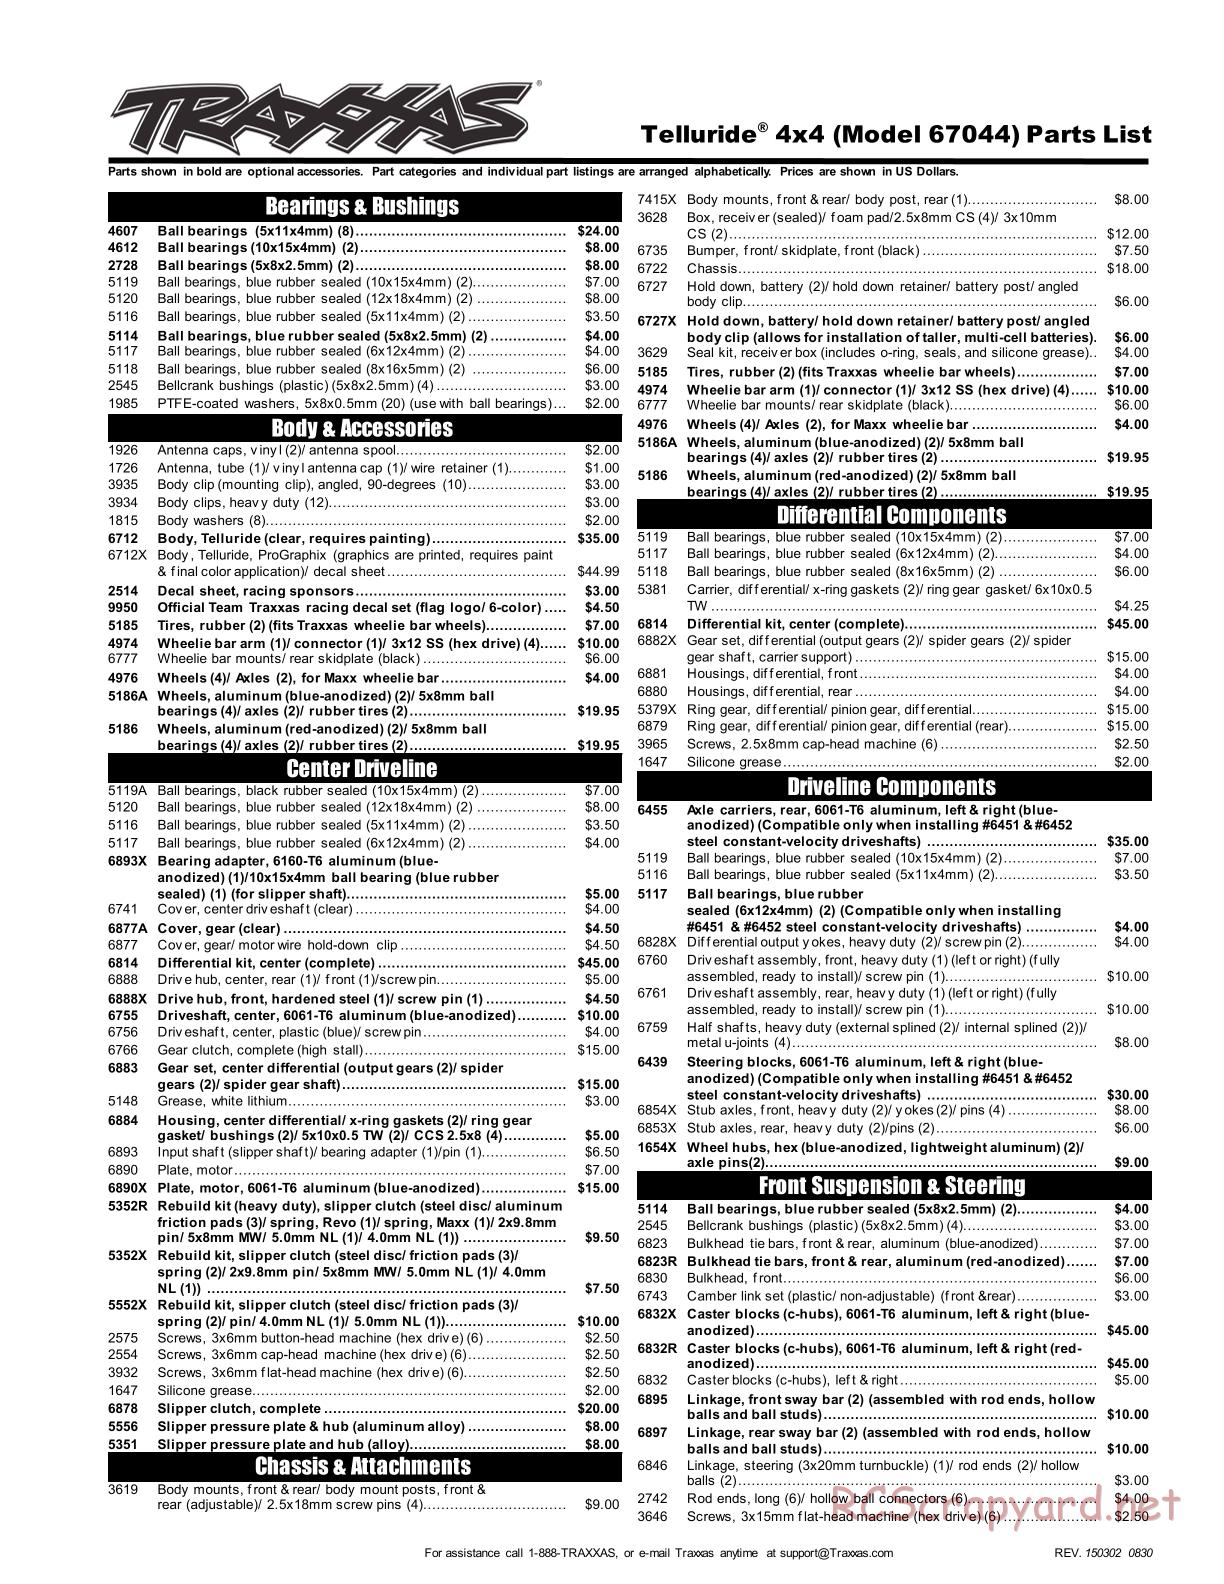 Traxxas - Telluride 4x4 (2013) - Parts List - Page 1